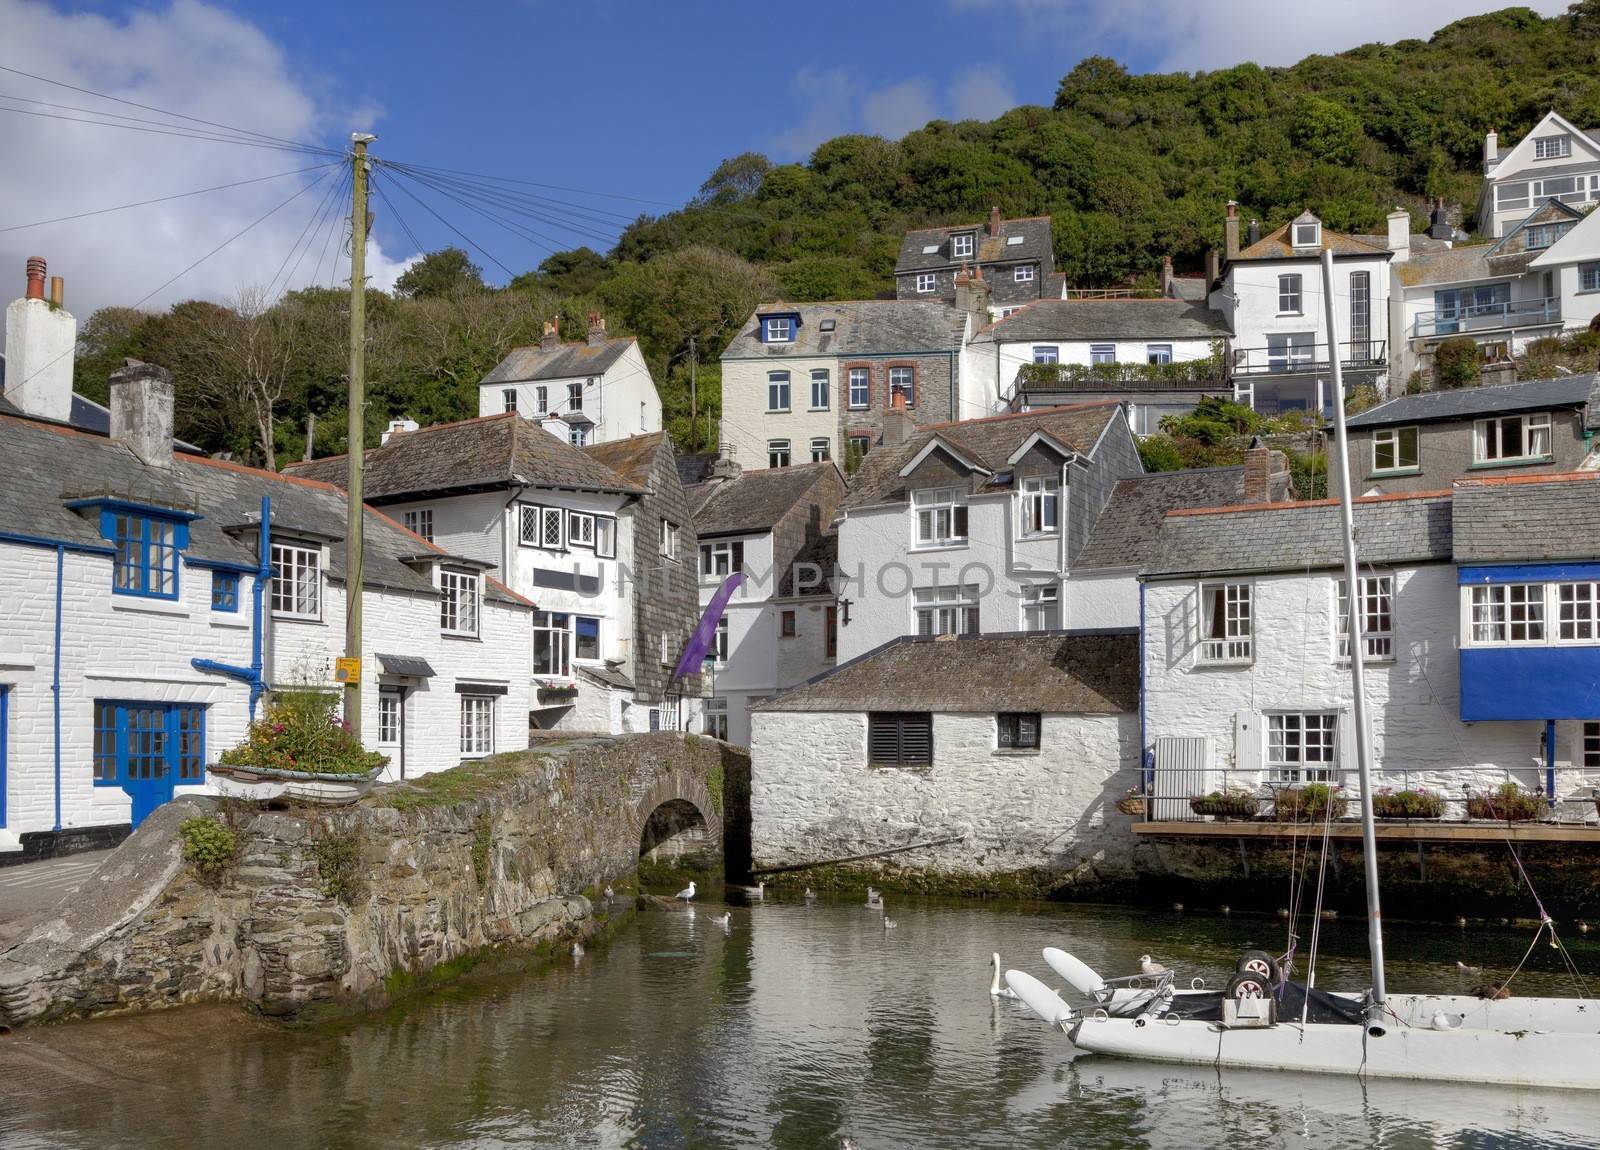 The popular holiday destination of Polperro, Cornwall, England.